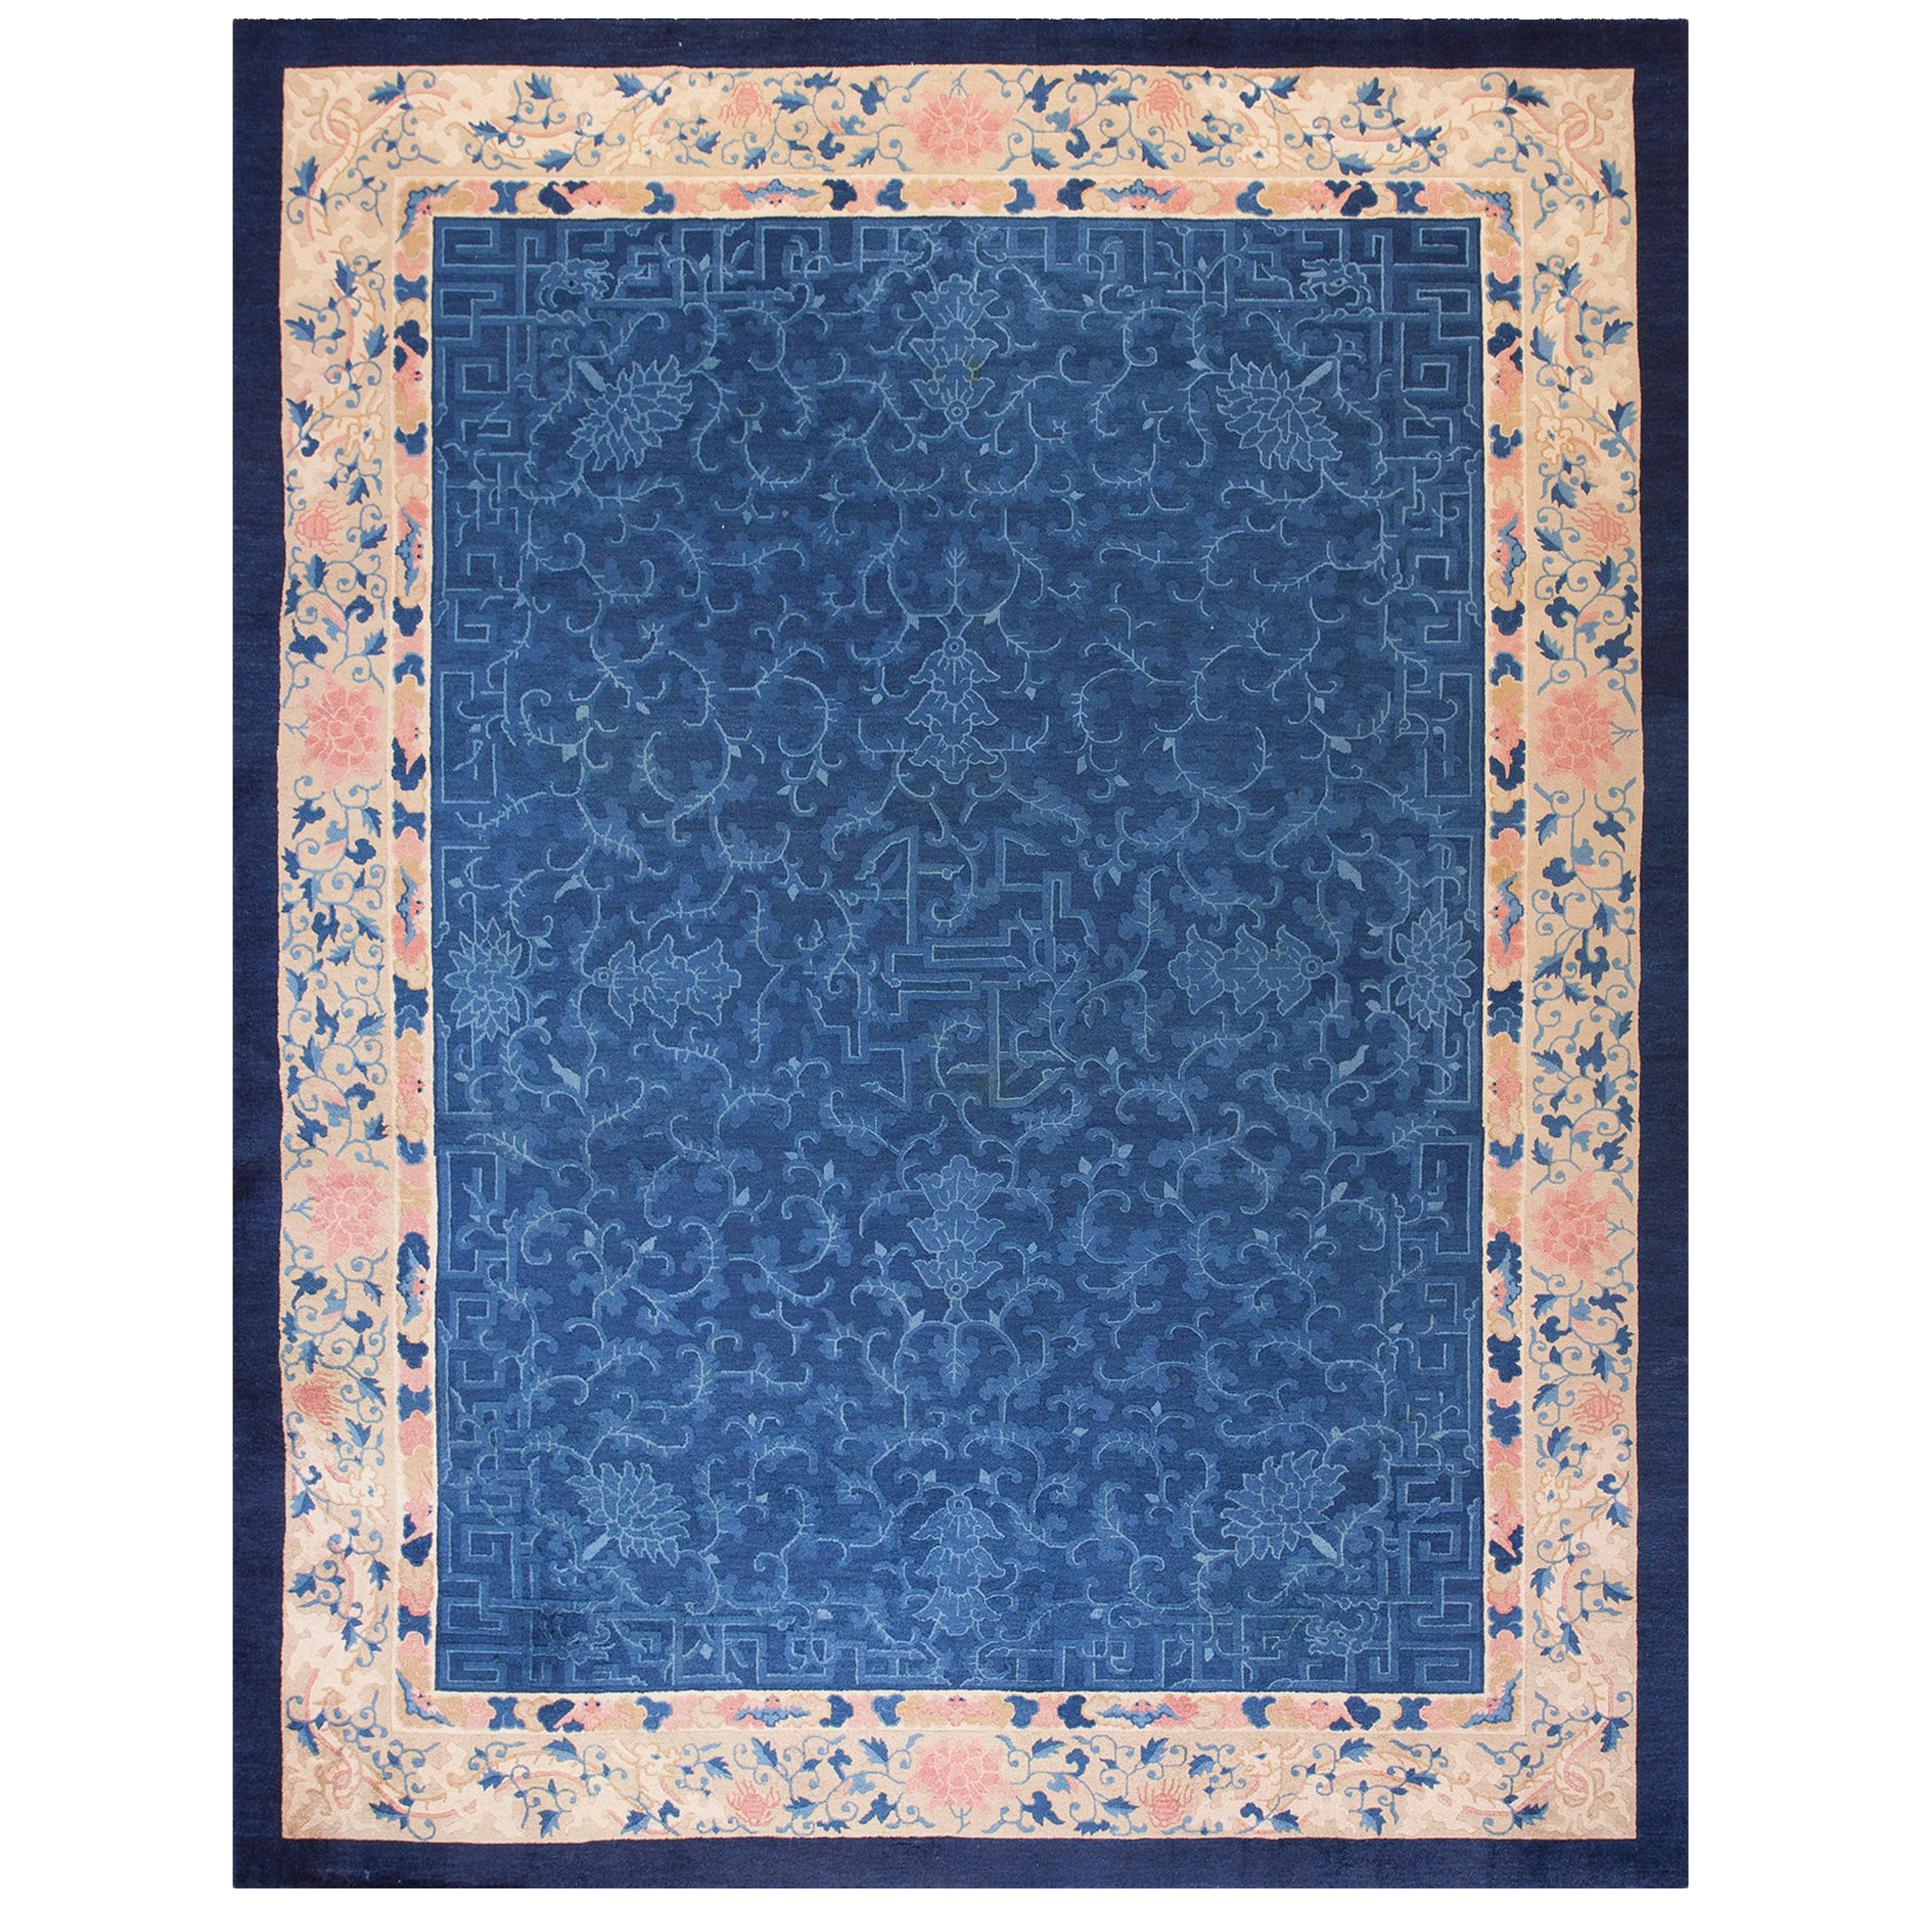 Early 20th Century Chinese Peking Carpet ( 9' x 11'9" - 275 x 360 cm )